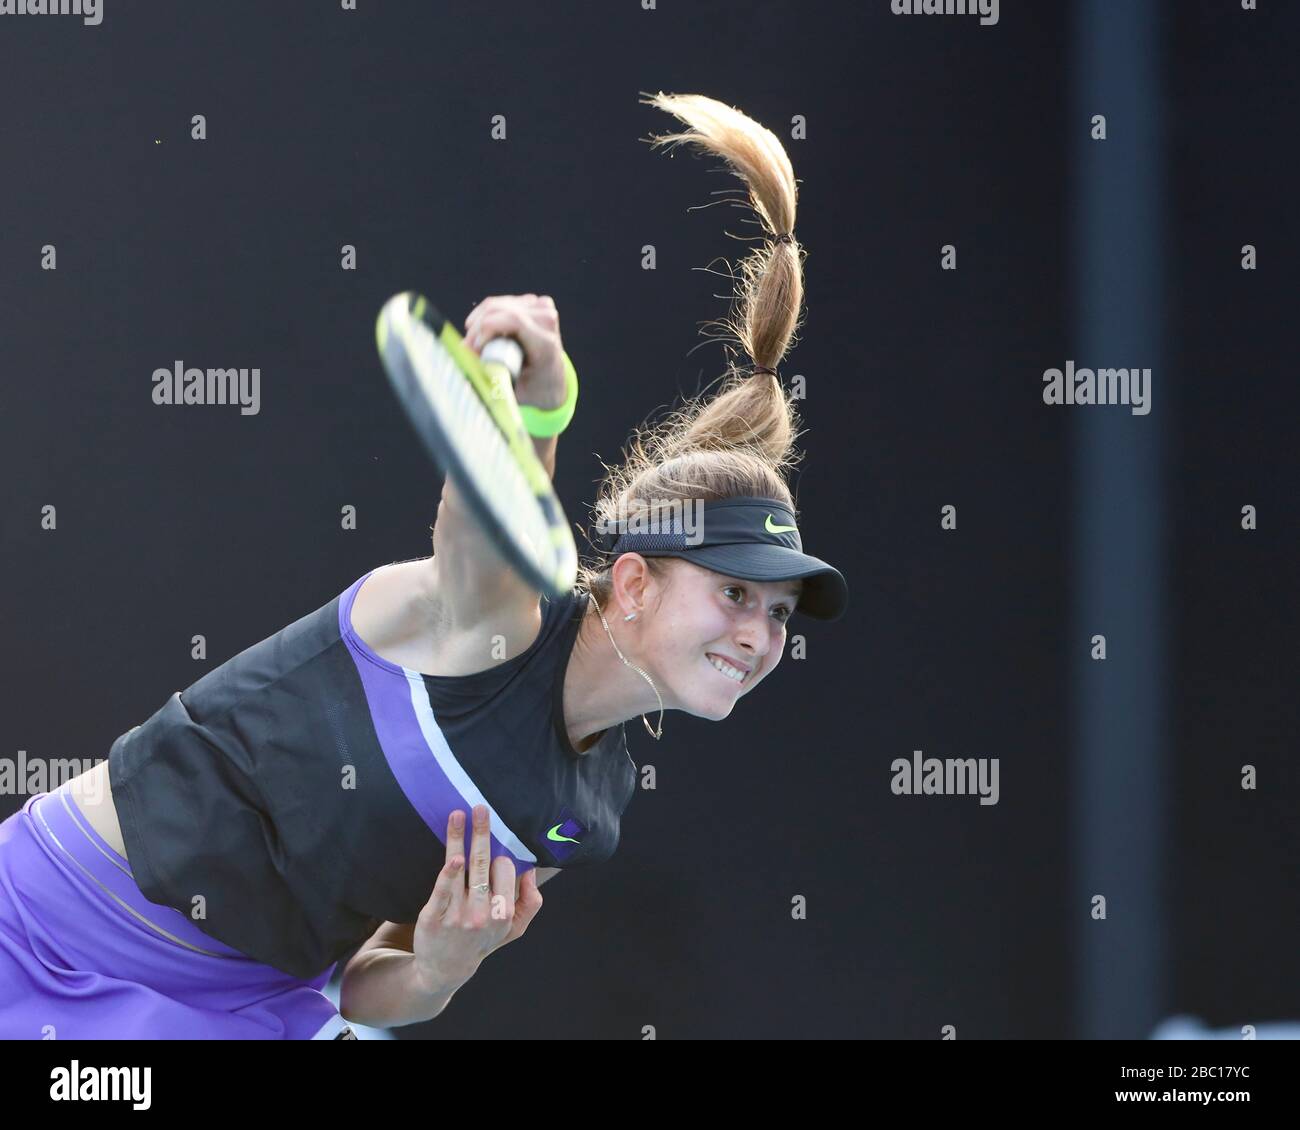 German tennis player Alexandra Vecic serving in Australian Open 2020 tennis tournament, Melbourne Park, Melbourne, Victoria, Australia Stock Photo